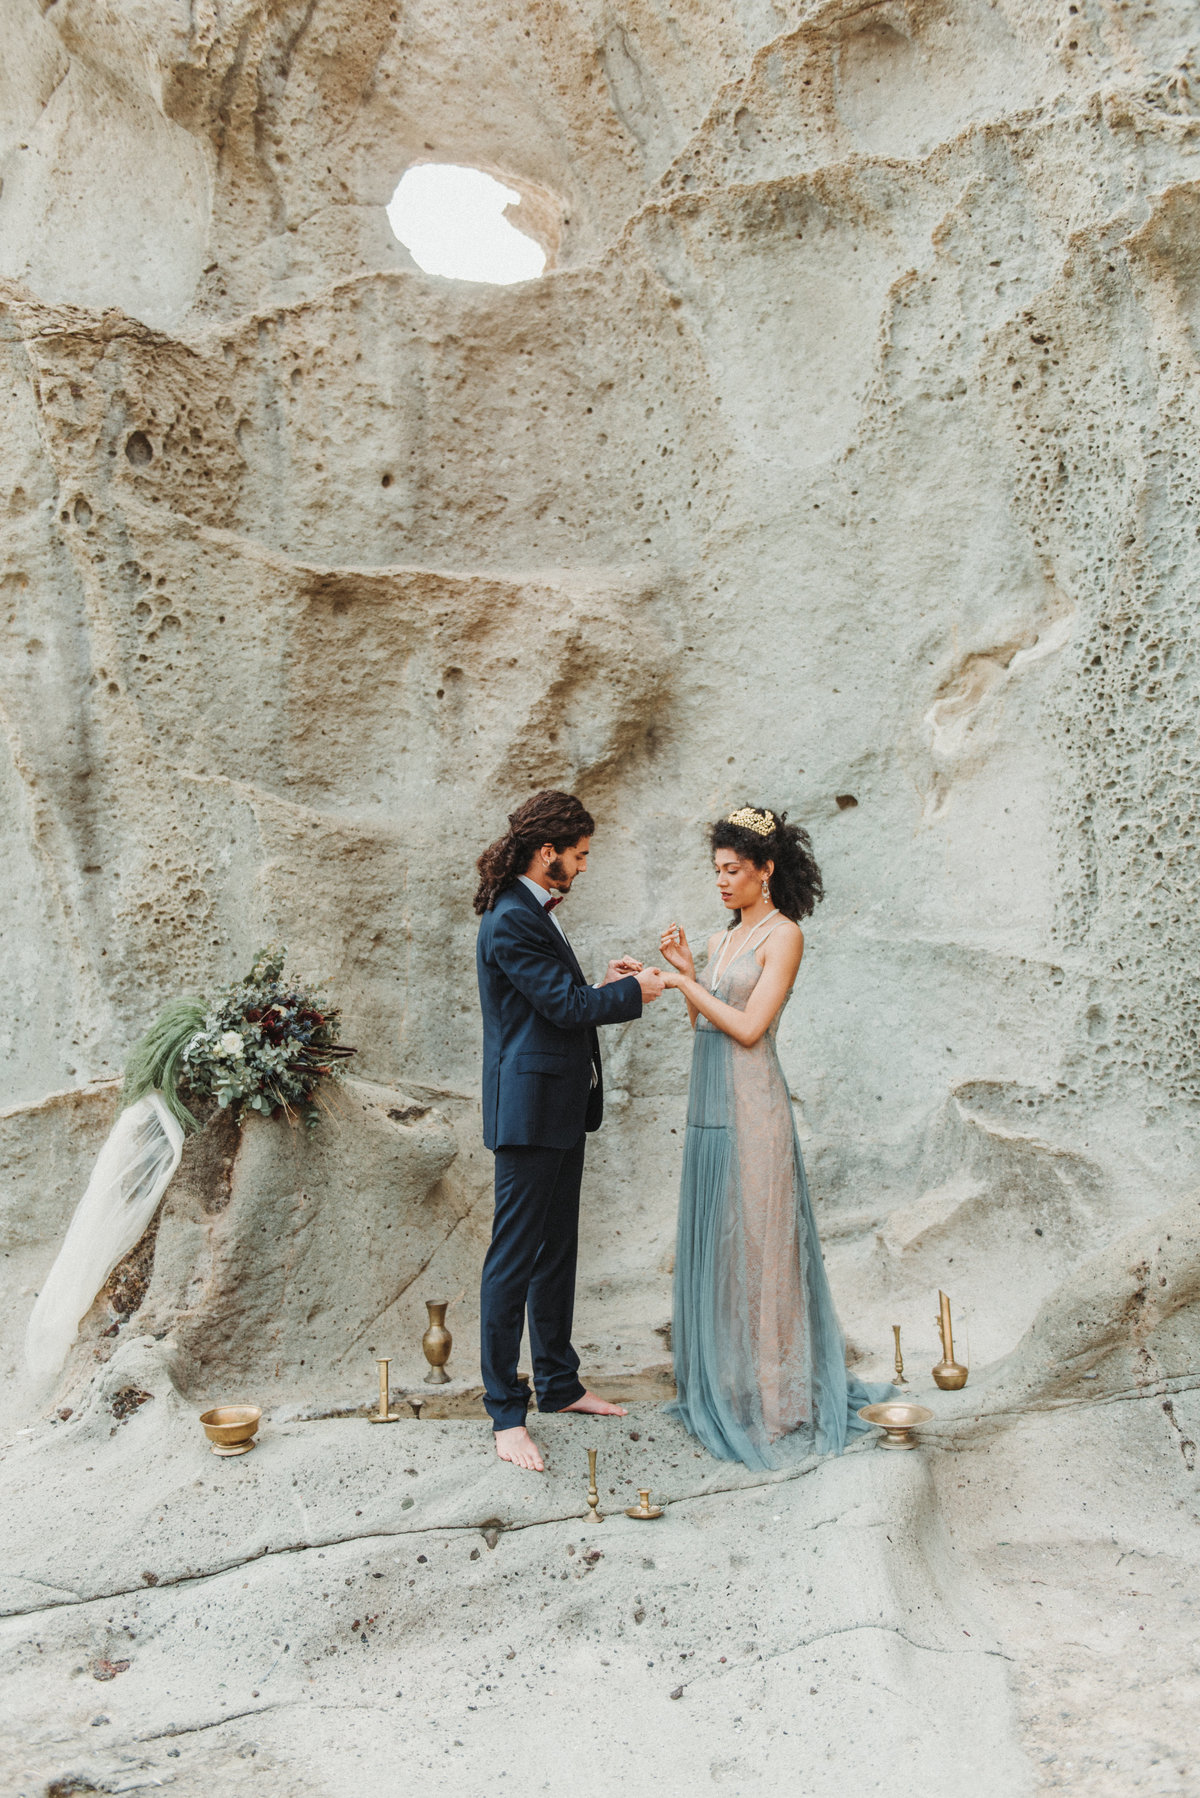 A decadent destination wedding in a desolate expanse of rocks